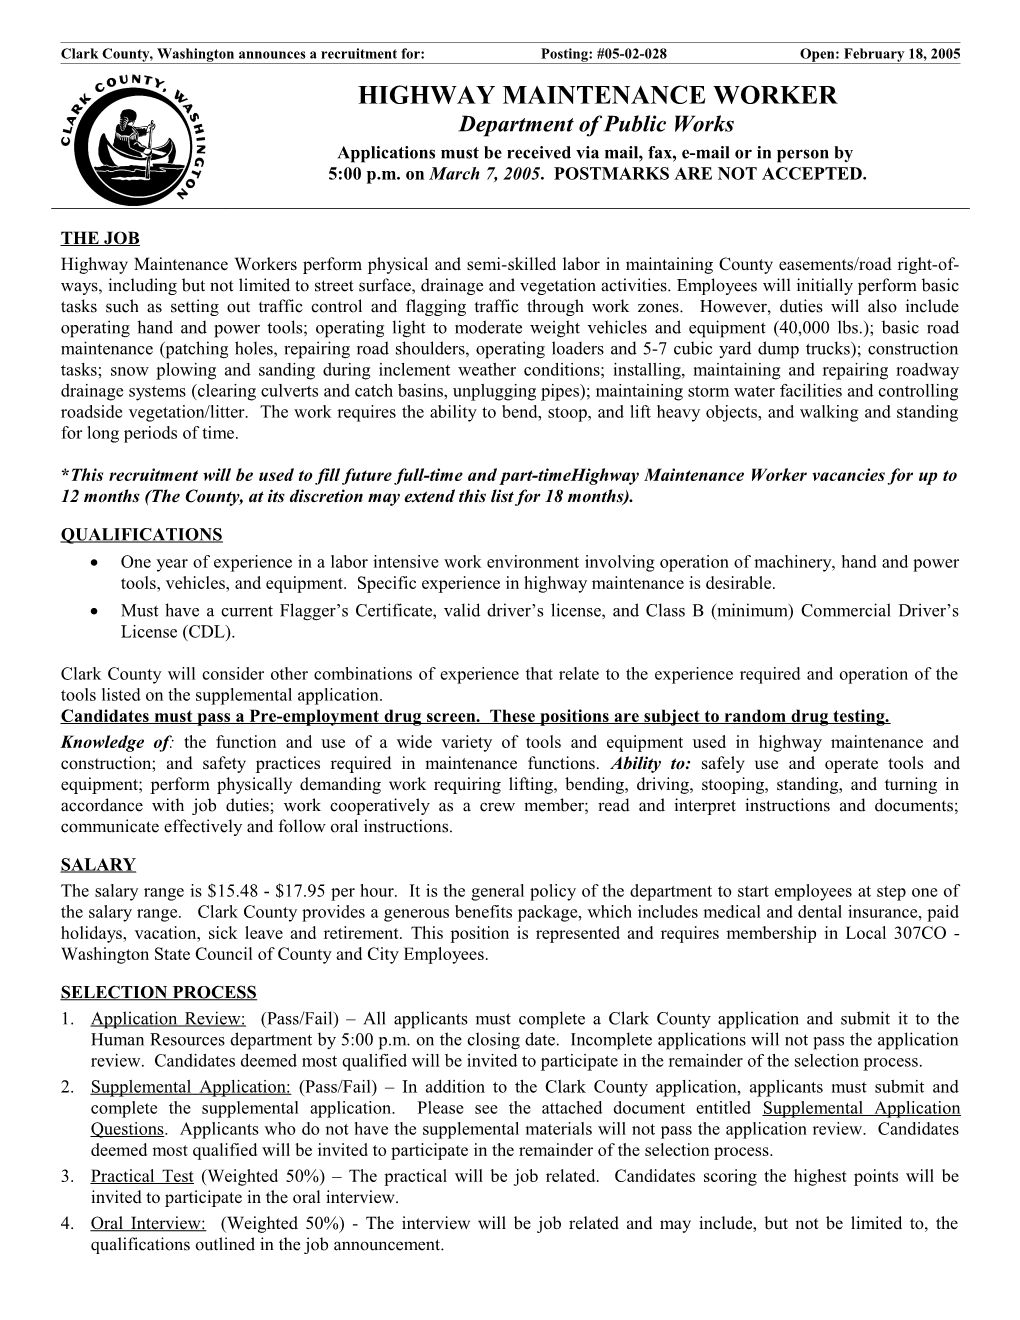 Clark County, Washington Announces a Recruitment For:Posting: #05-02-028Open: February